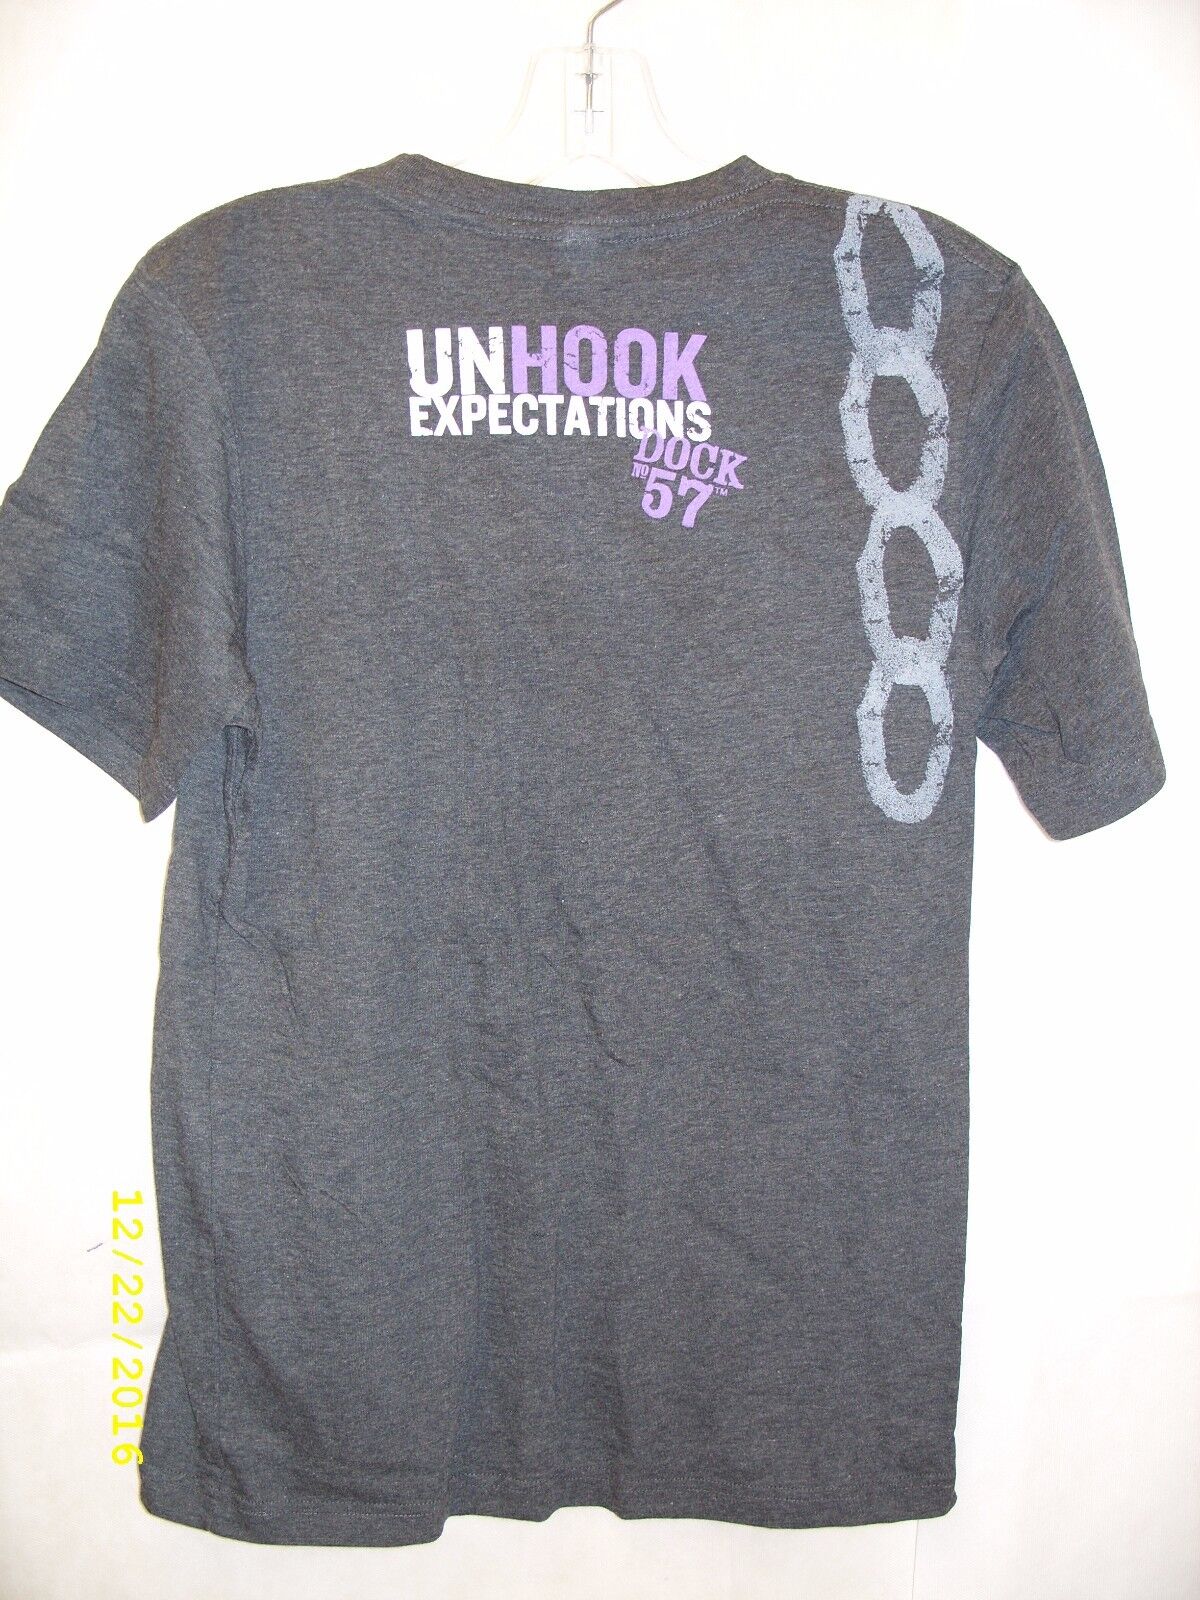 Canadian Club - Dock No. 57 Whiskey - "Unhook Expectations" Promo Ladies T-Shirt Canadian Club - фотография #4